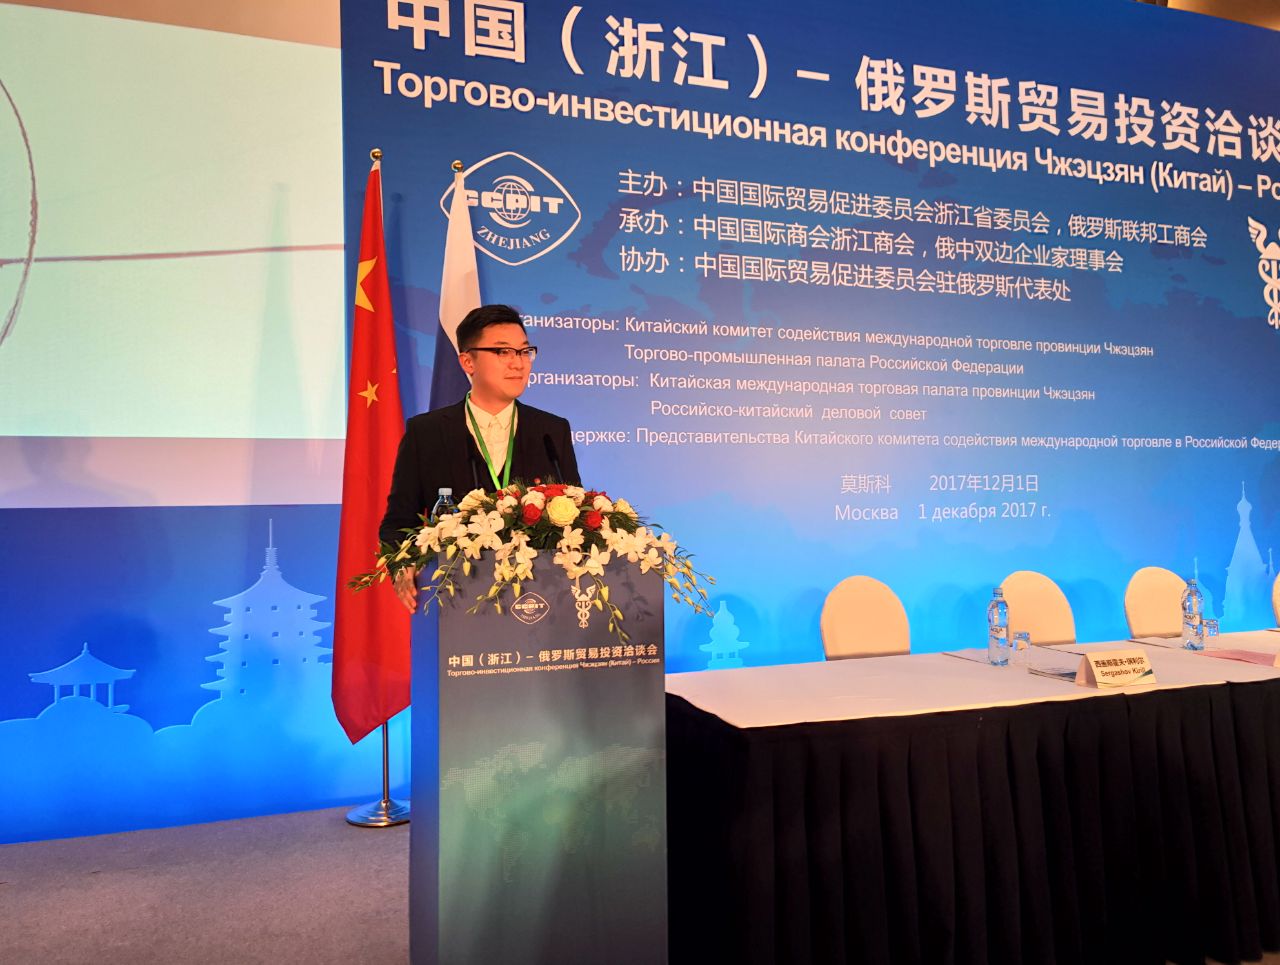 Торгово-инвестиционная конференция Чжэцзян (Китай) – Россия [2]